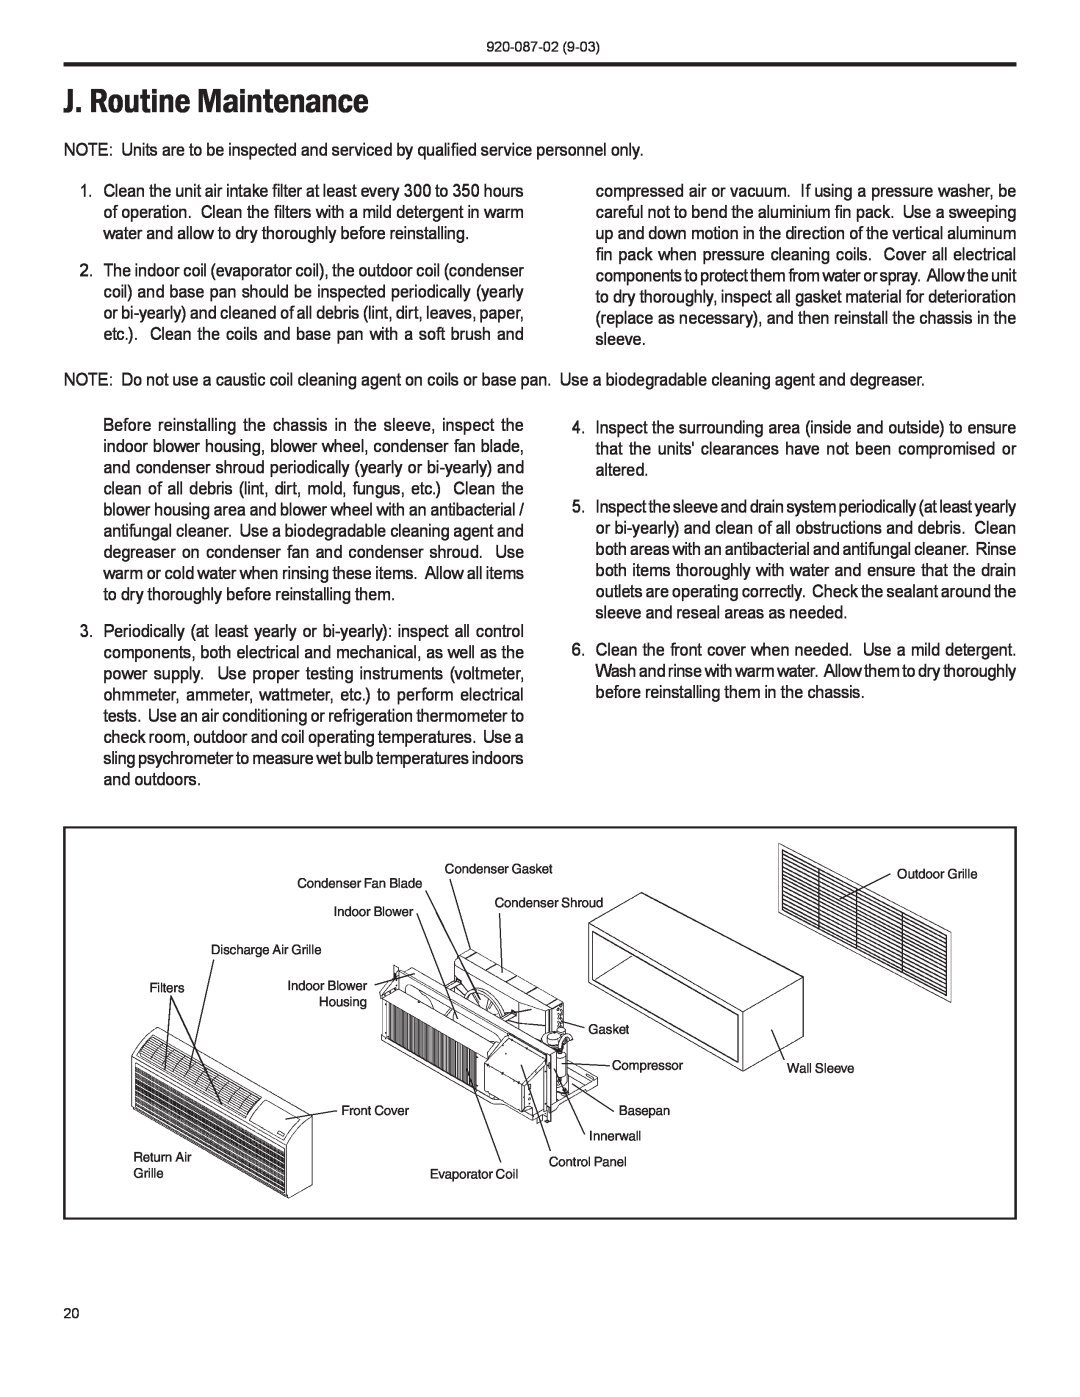 Friedrich PTAC operation manual J. Routine Maintenance 